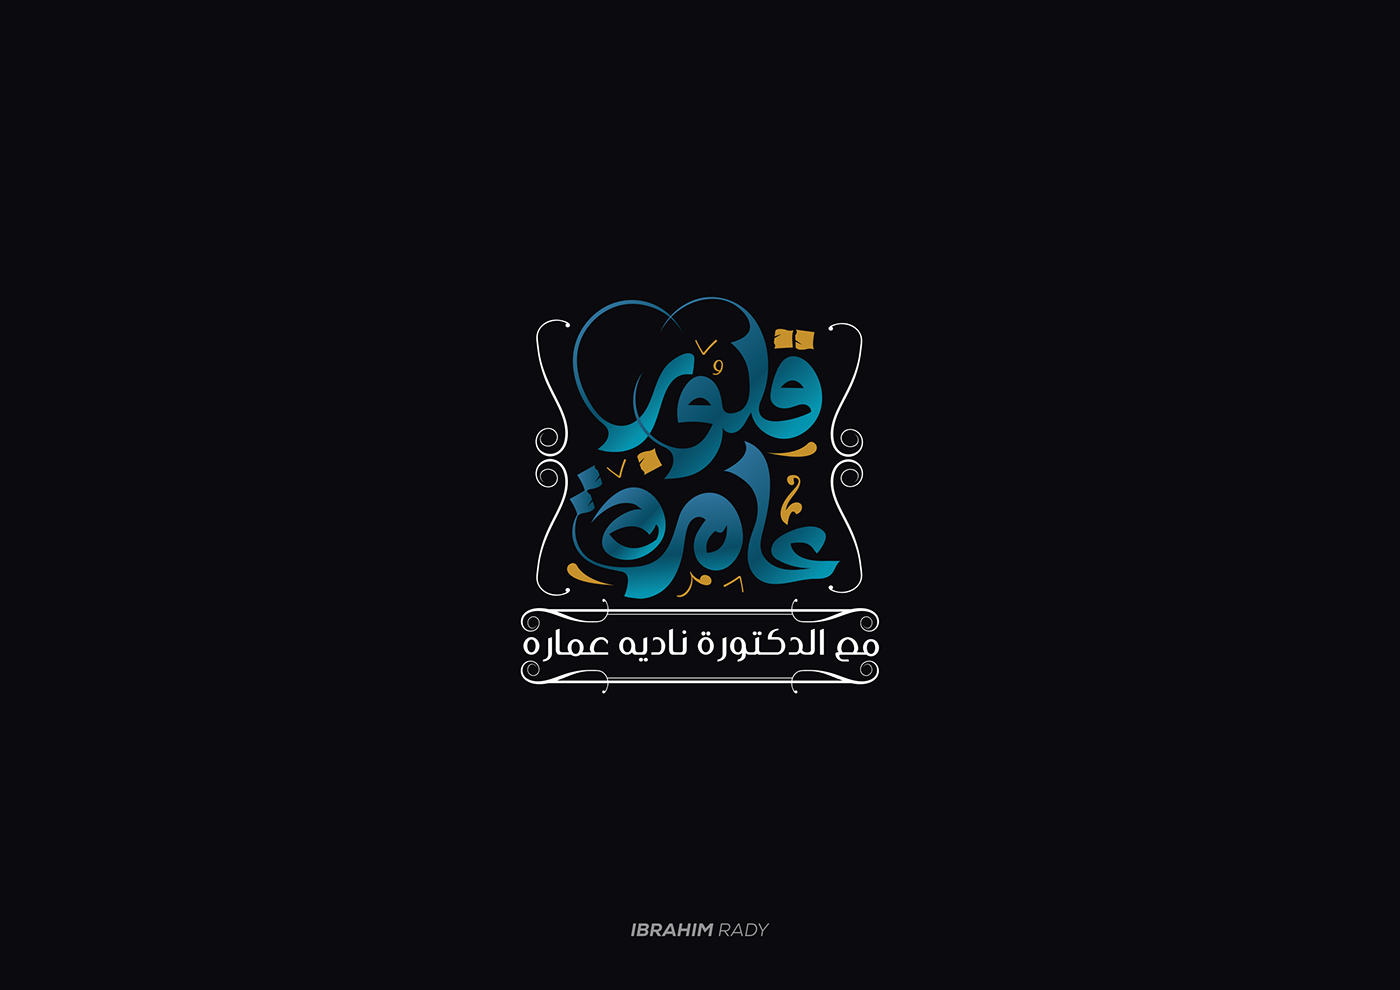 typography   typography #arabic #calligraphy #typography #typo #art #design #كاليجراف #تايبوجرافي #تايبوغرافي #تايبو #عربي #خط #ibrahim_radi #خط_حر #خط_عربي